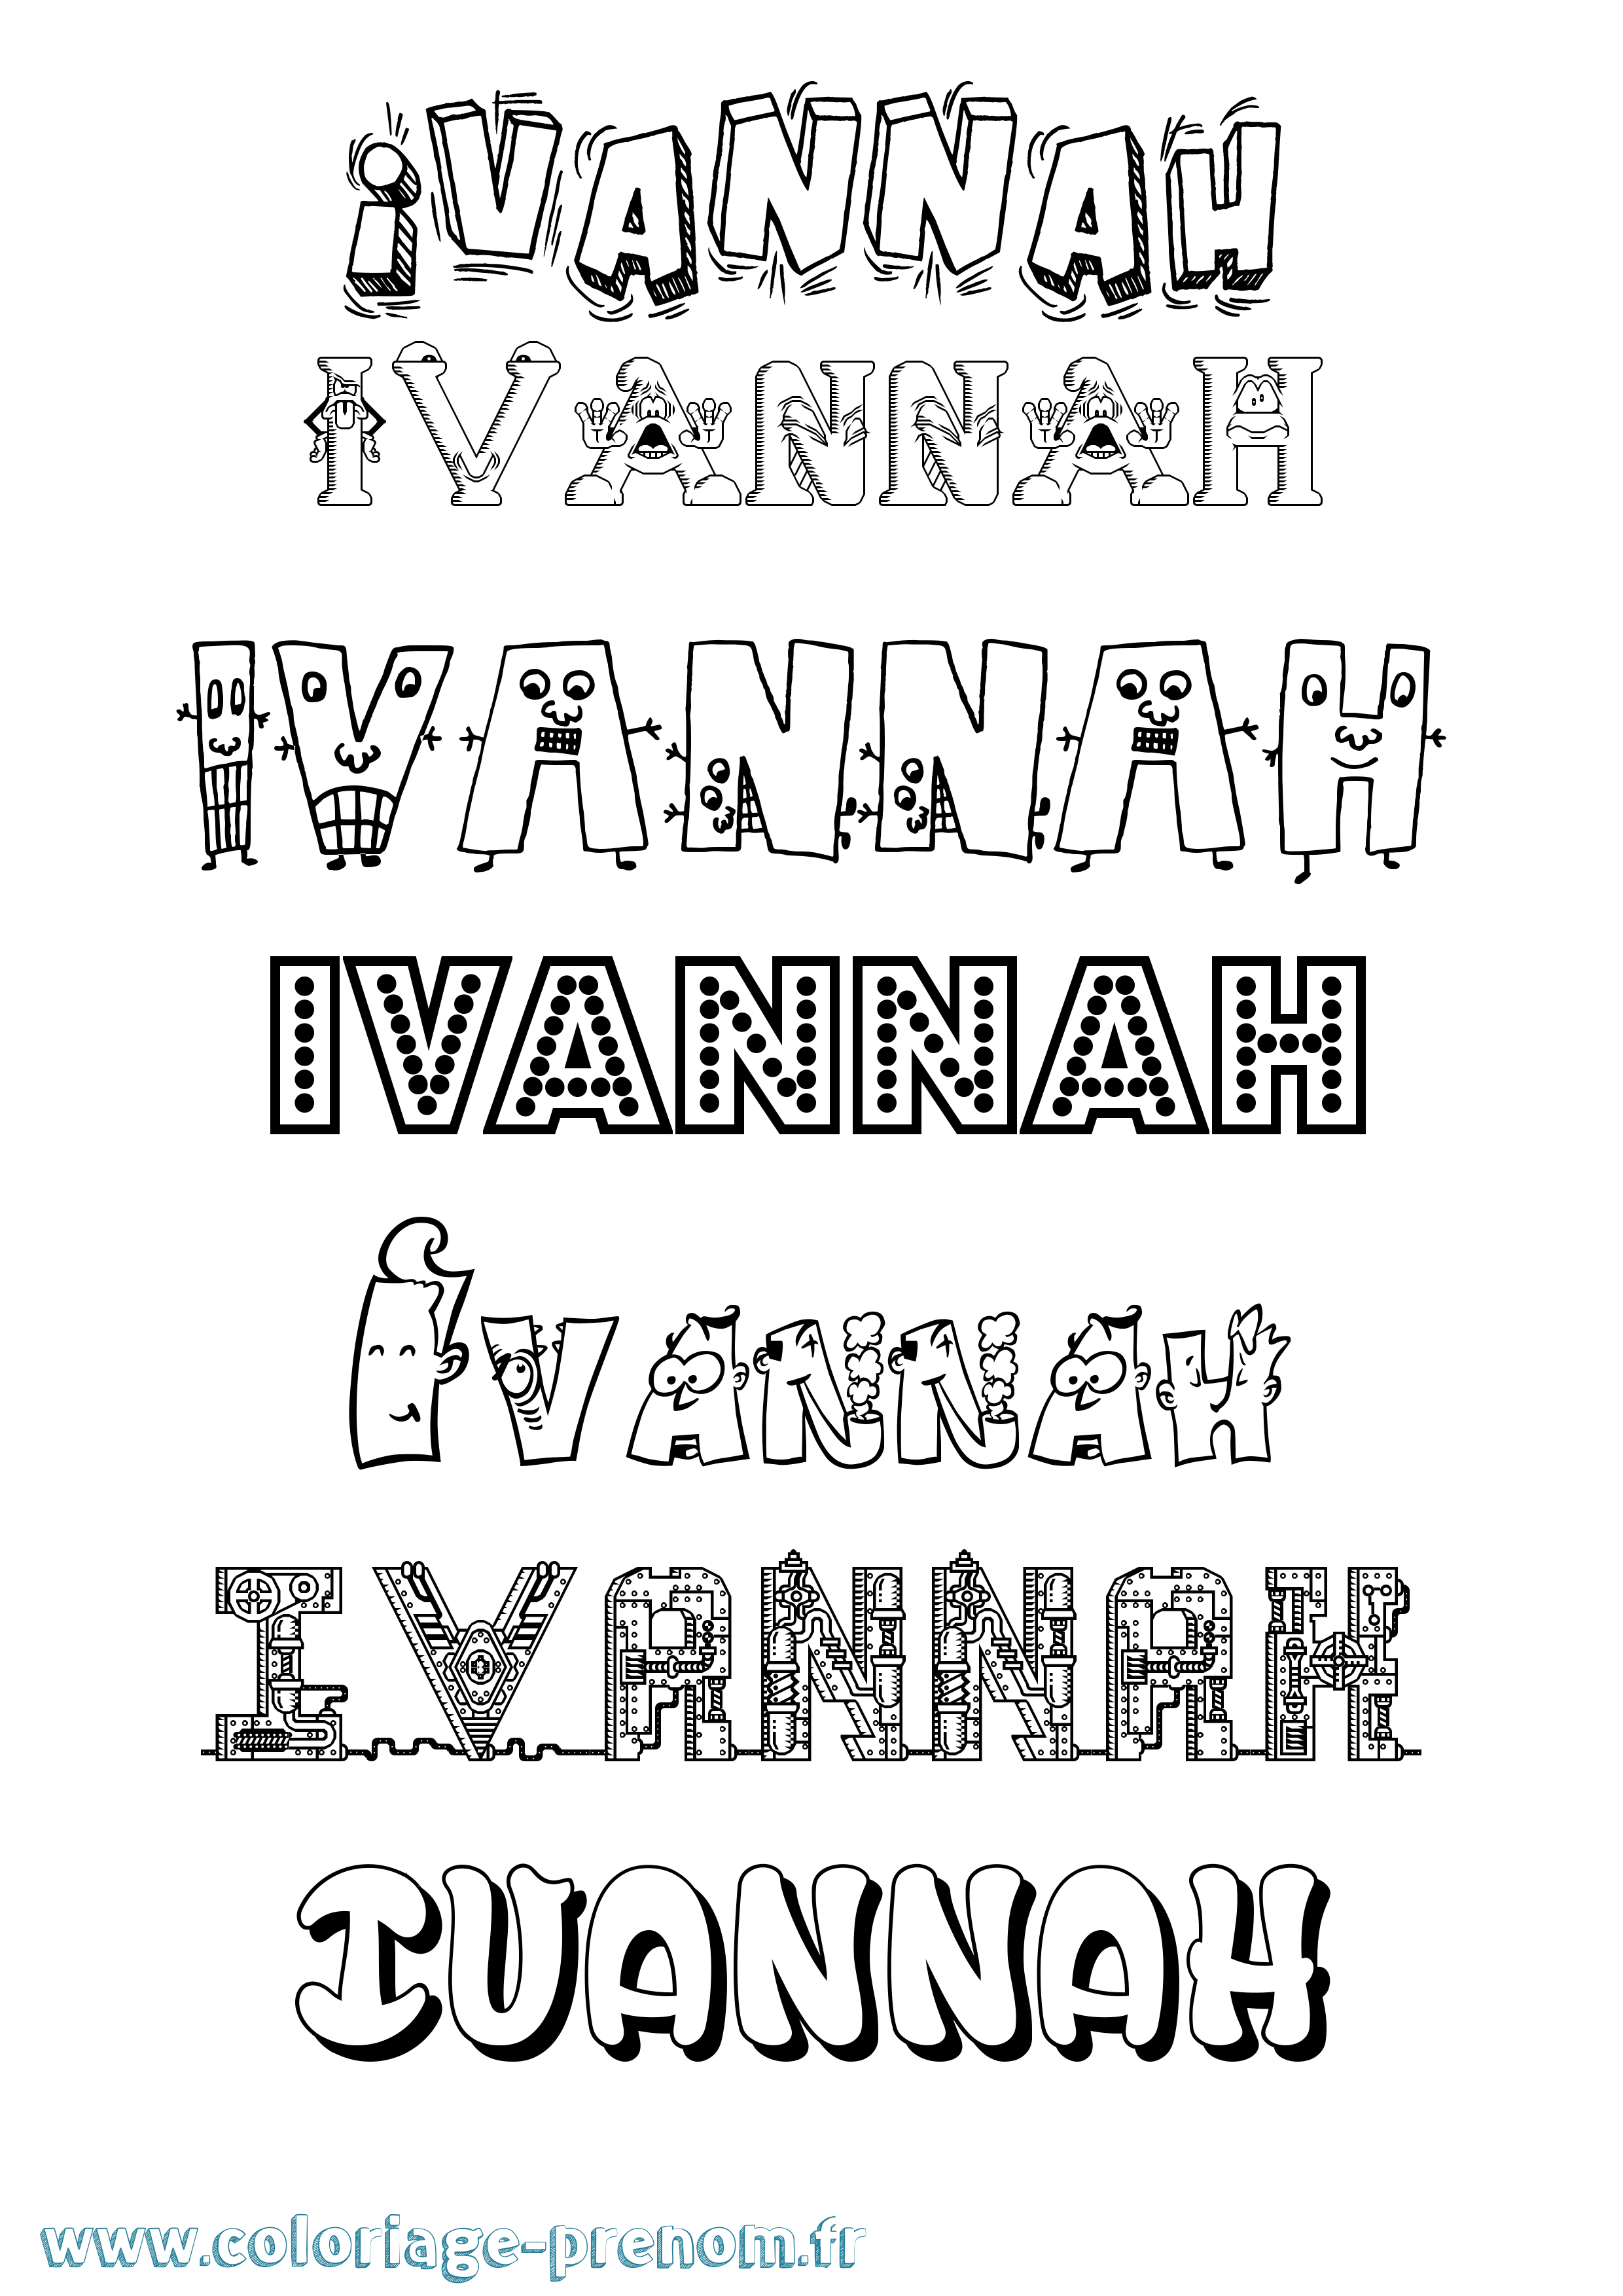 Coloriage prénom Ivannah Fun